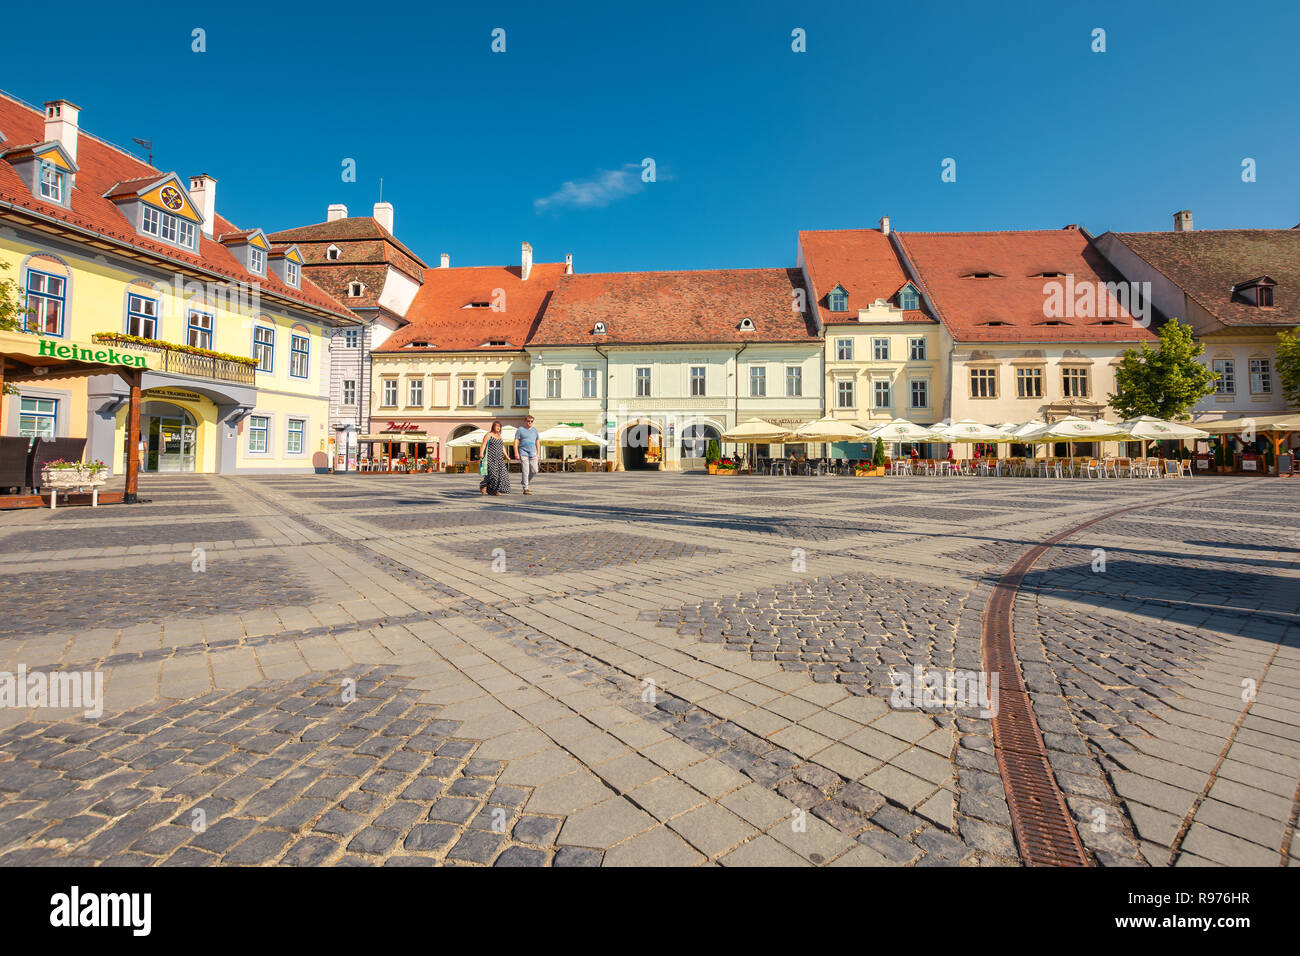 File:Sibiu (Hermannstadt, Nagyszeben) - Large Square (Piața Mare, Großer  Ring).jpg - Wikimedia Commons